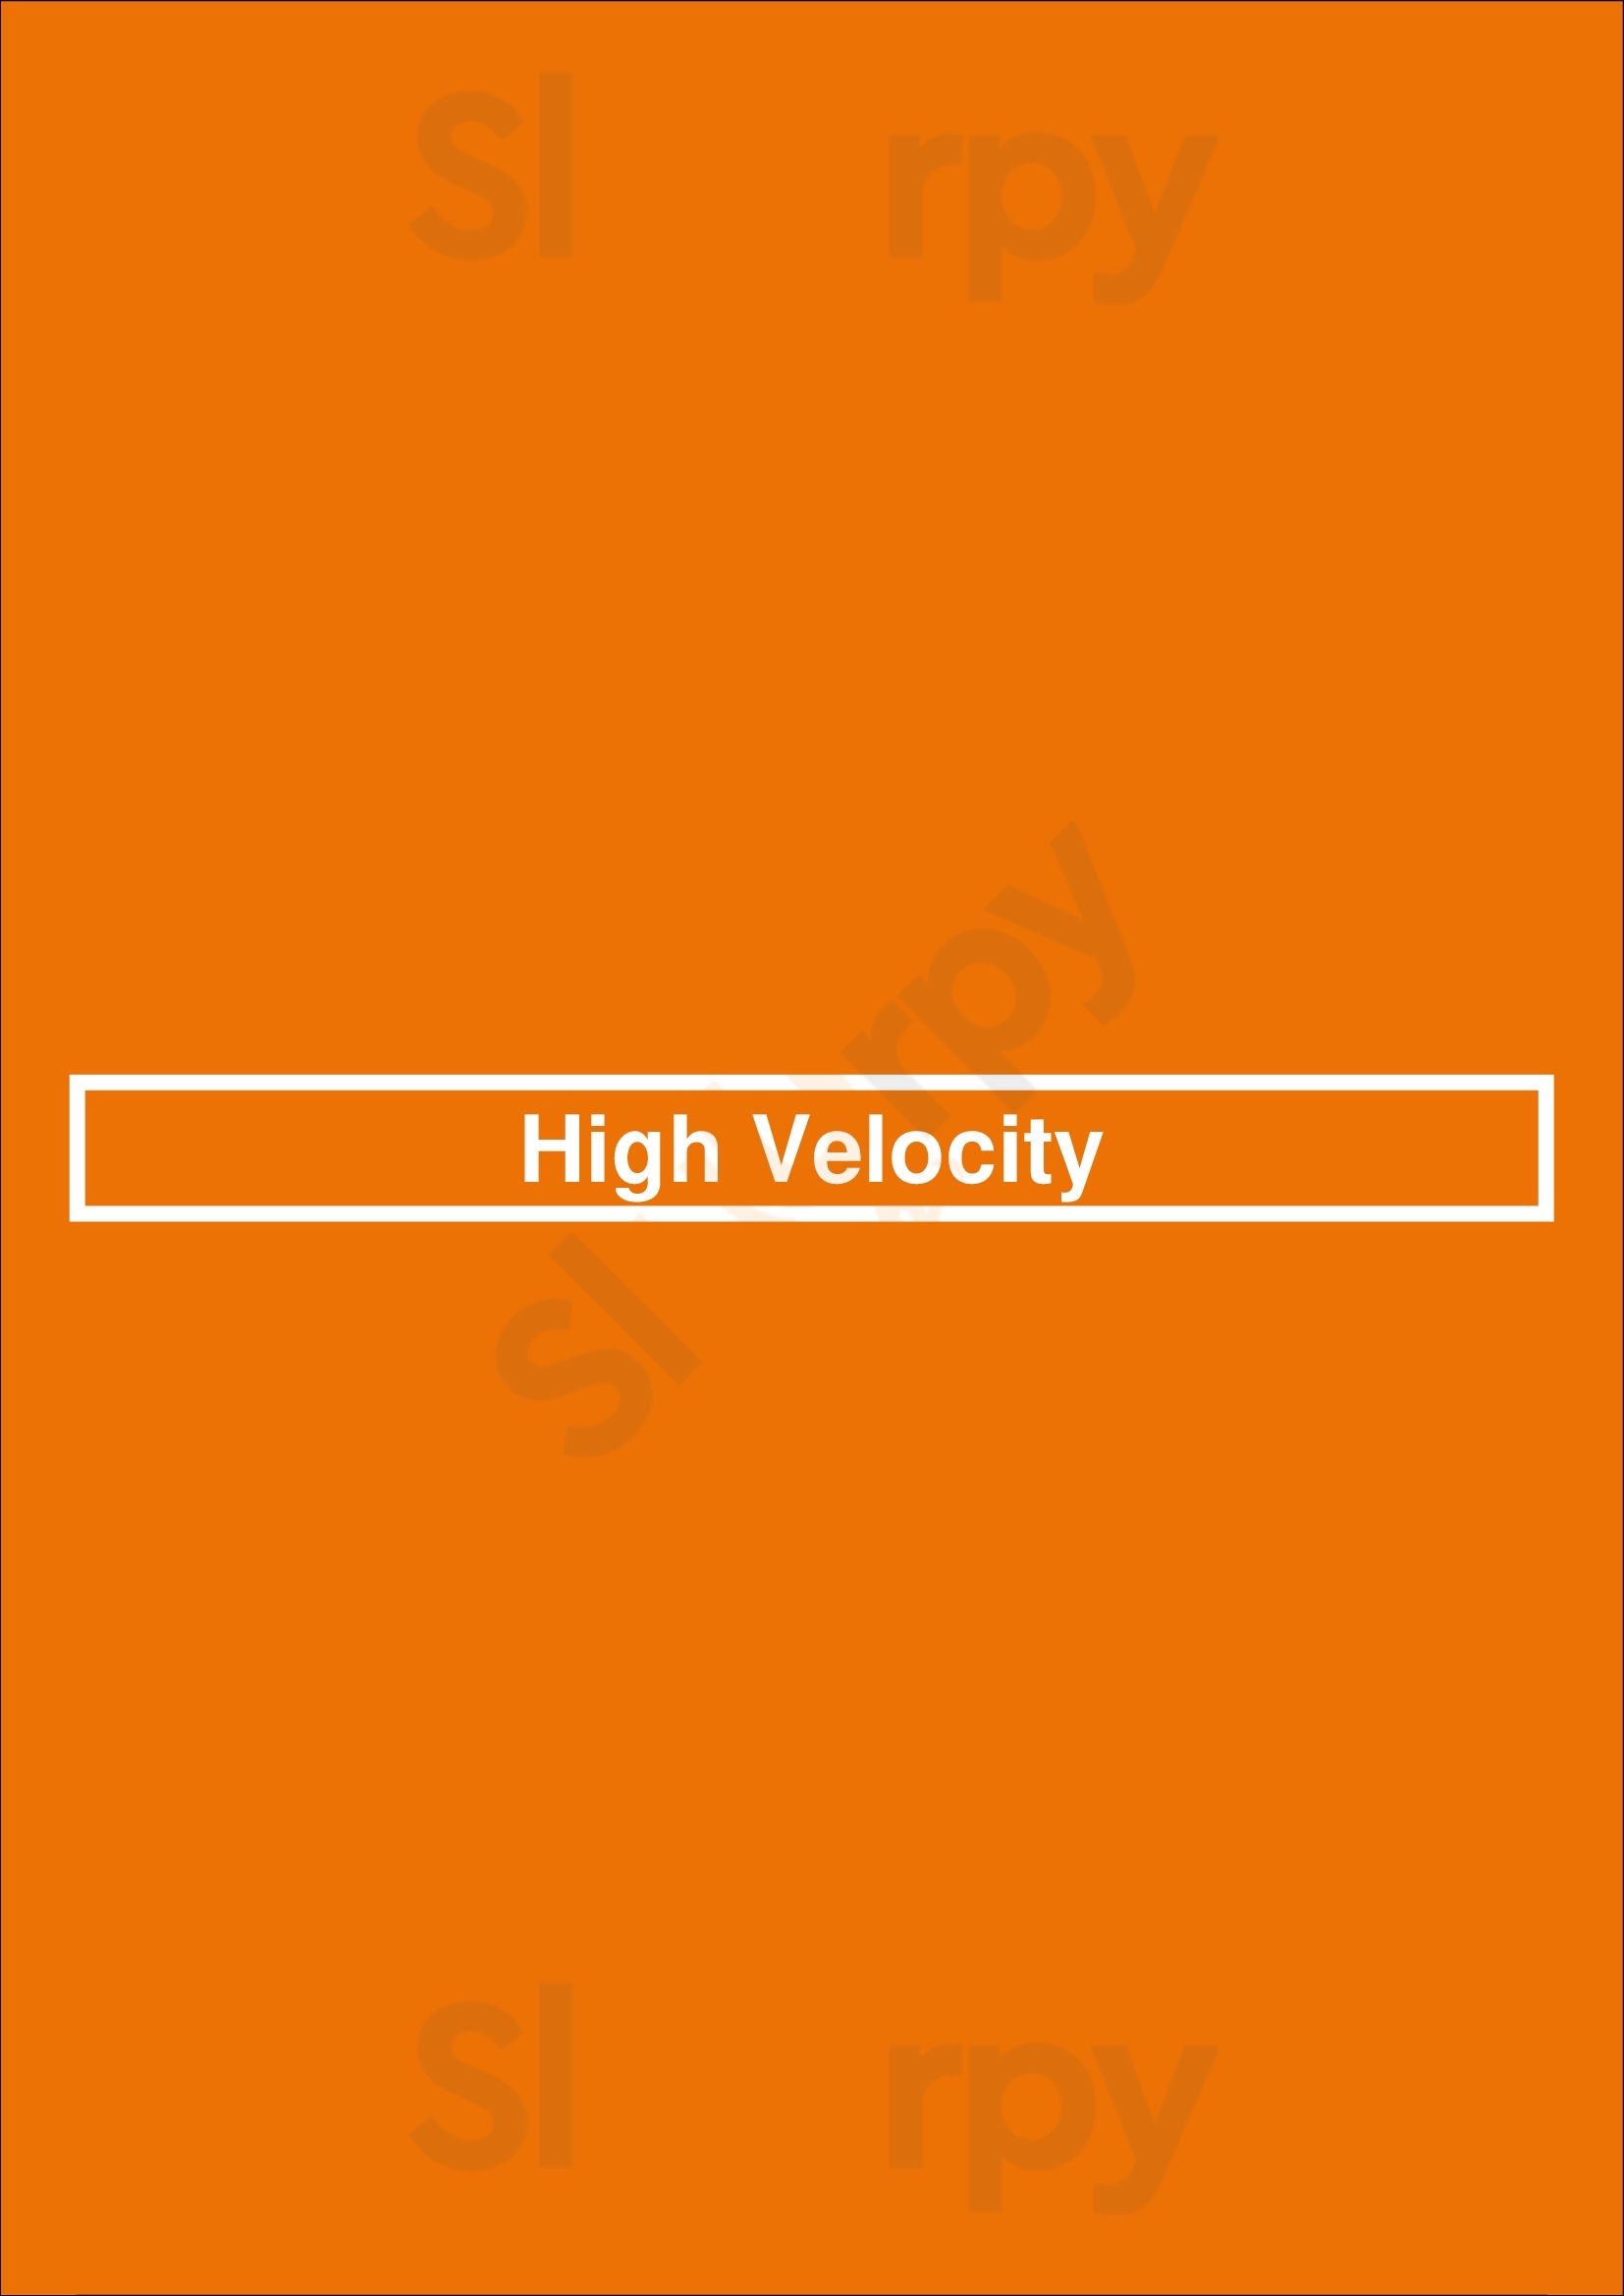 High Velocity Washington DC Menu - 1